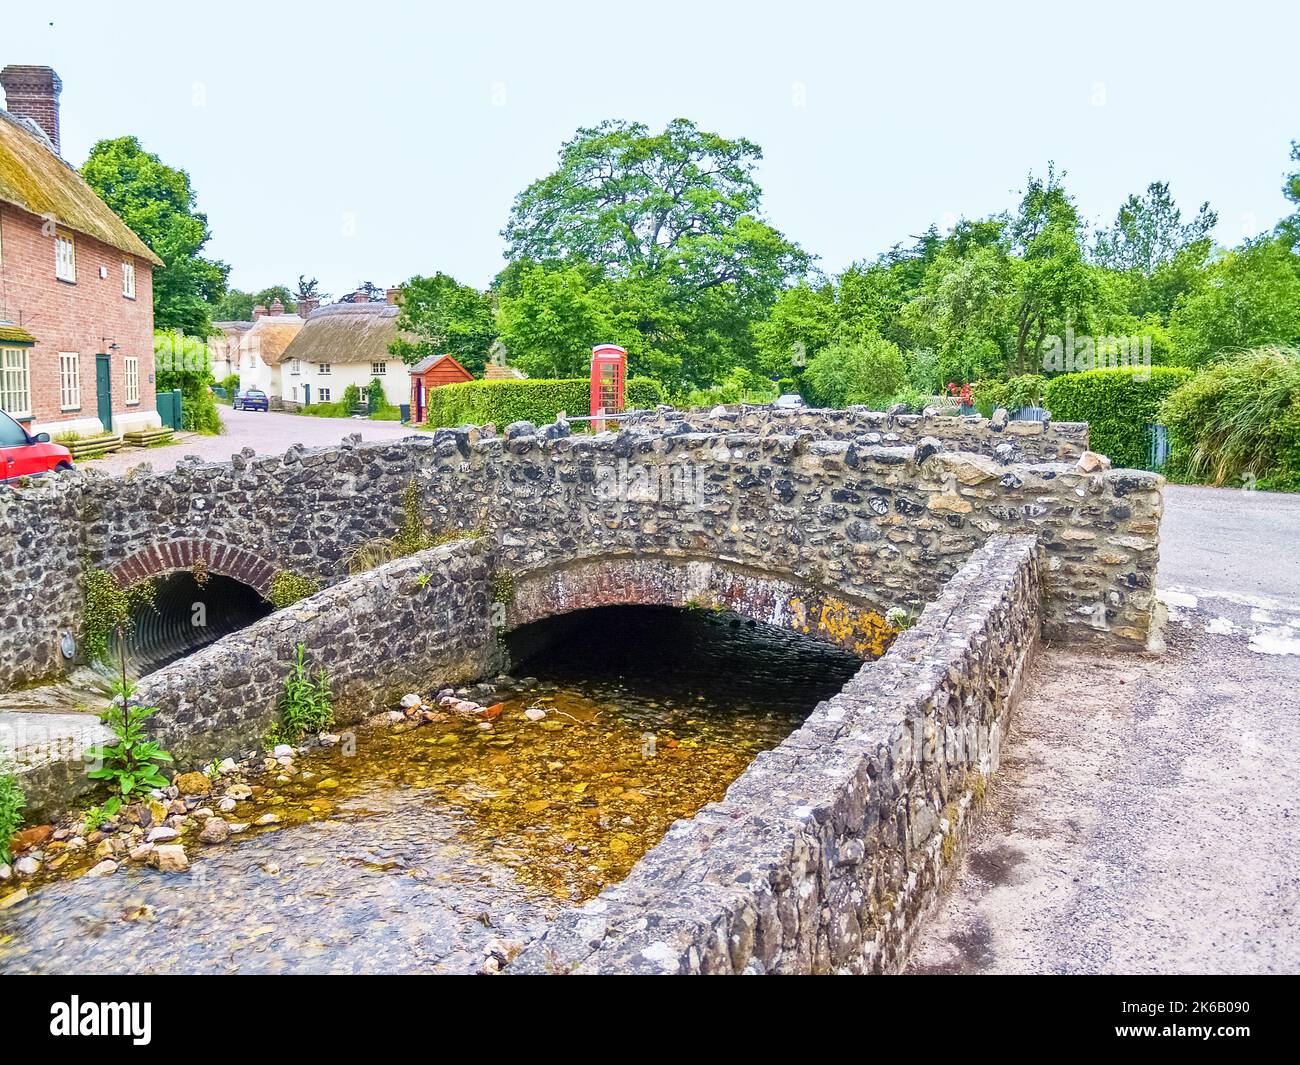 Small stone arch bridge at entry to small English village in United Kingdom. Stock Photo